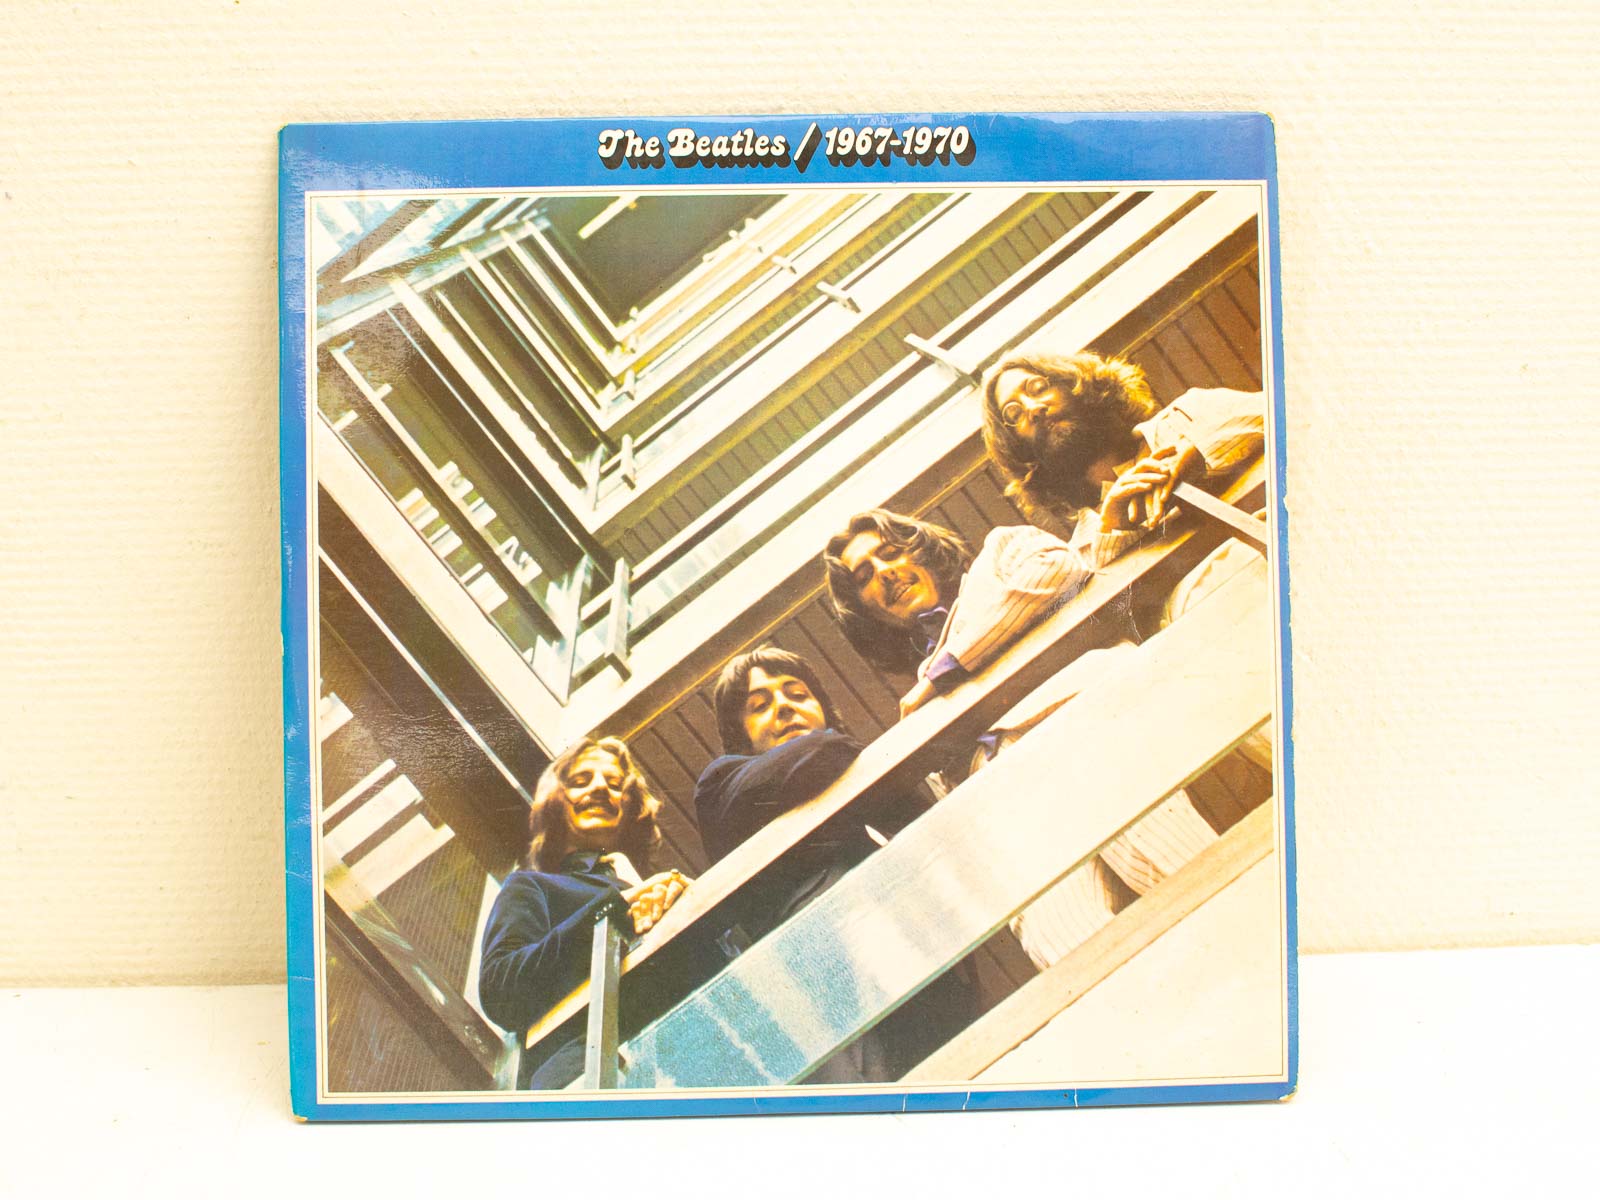 2 LP van the beatles /1967-1970  32463